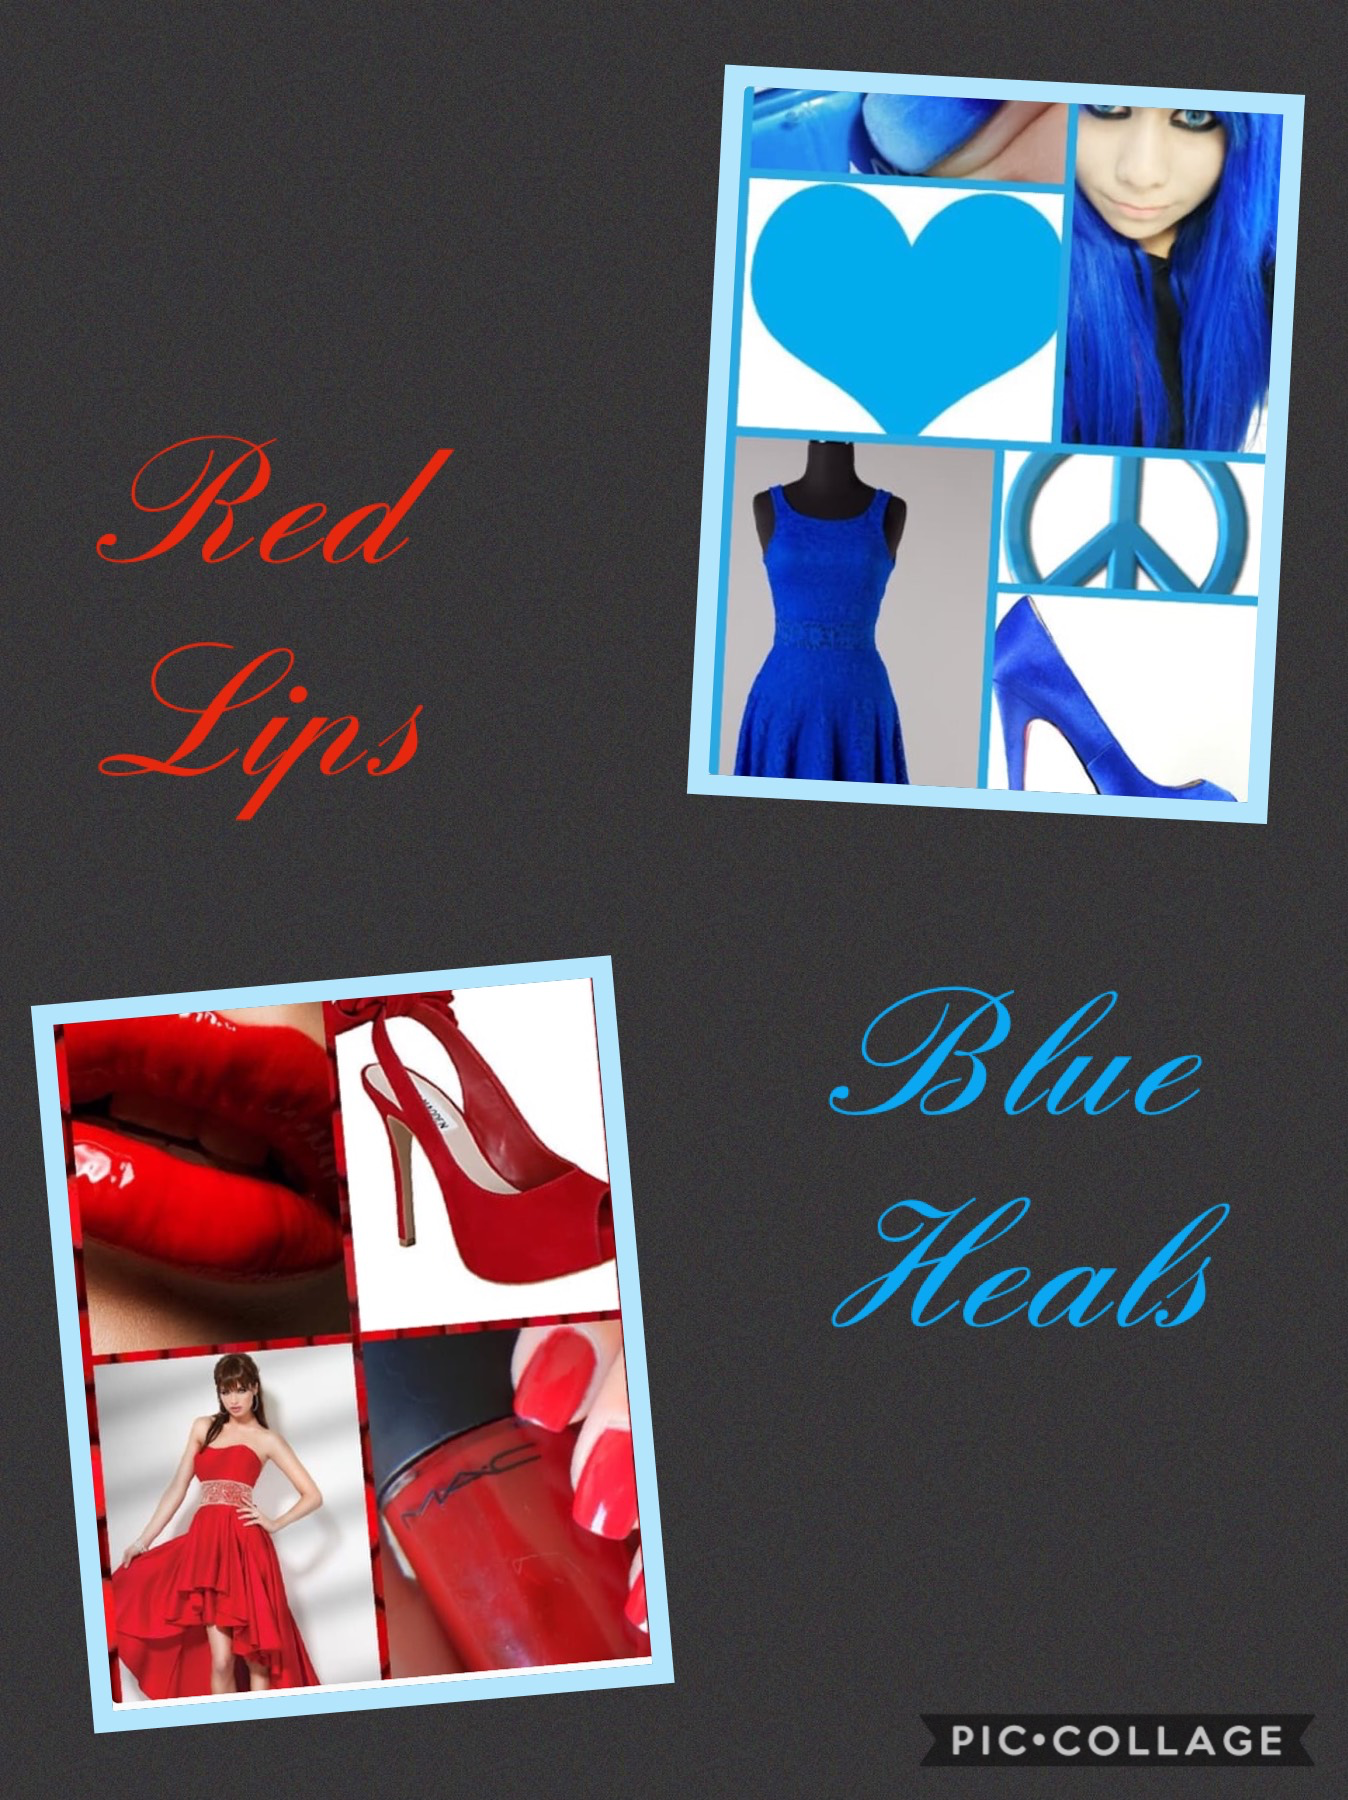 Red lips blue heals